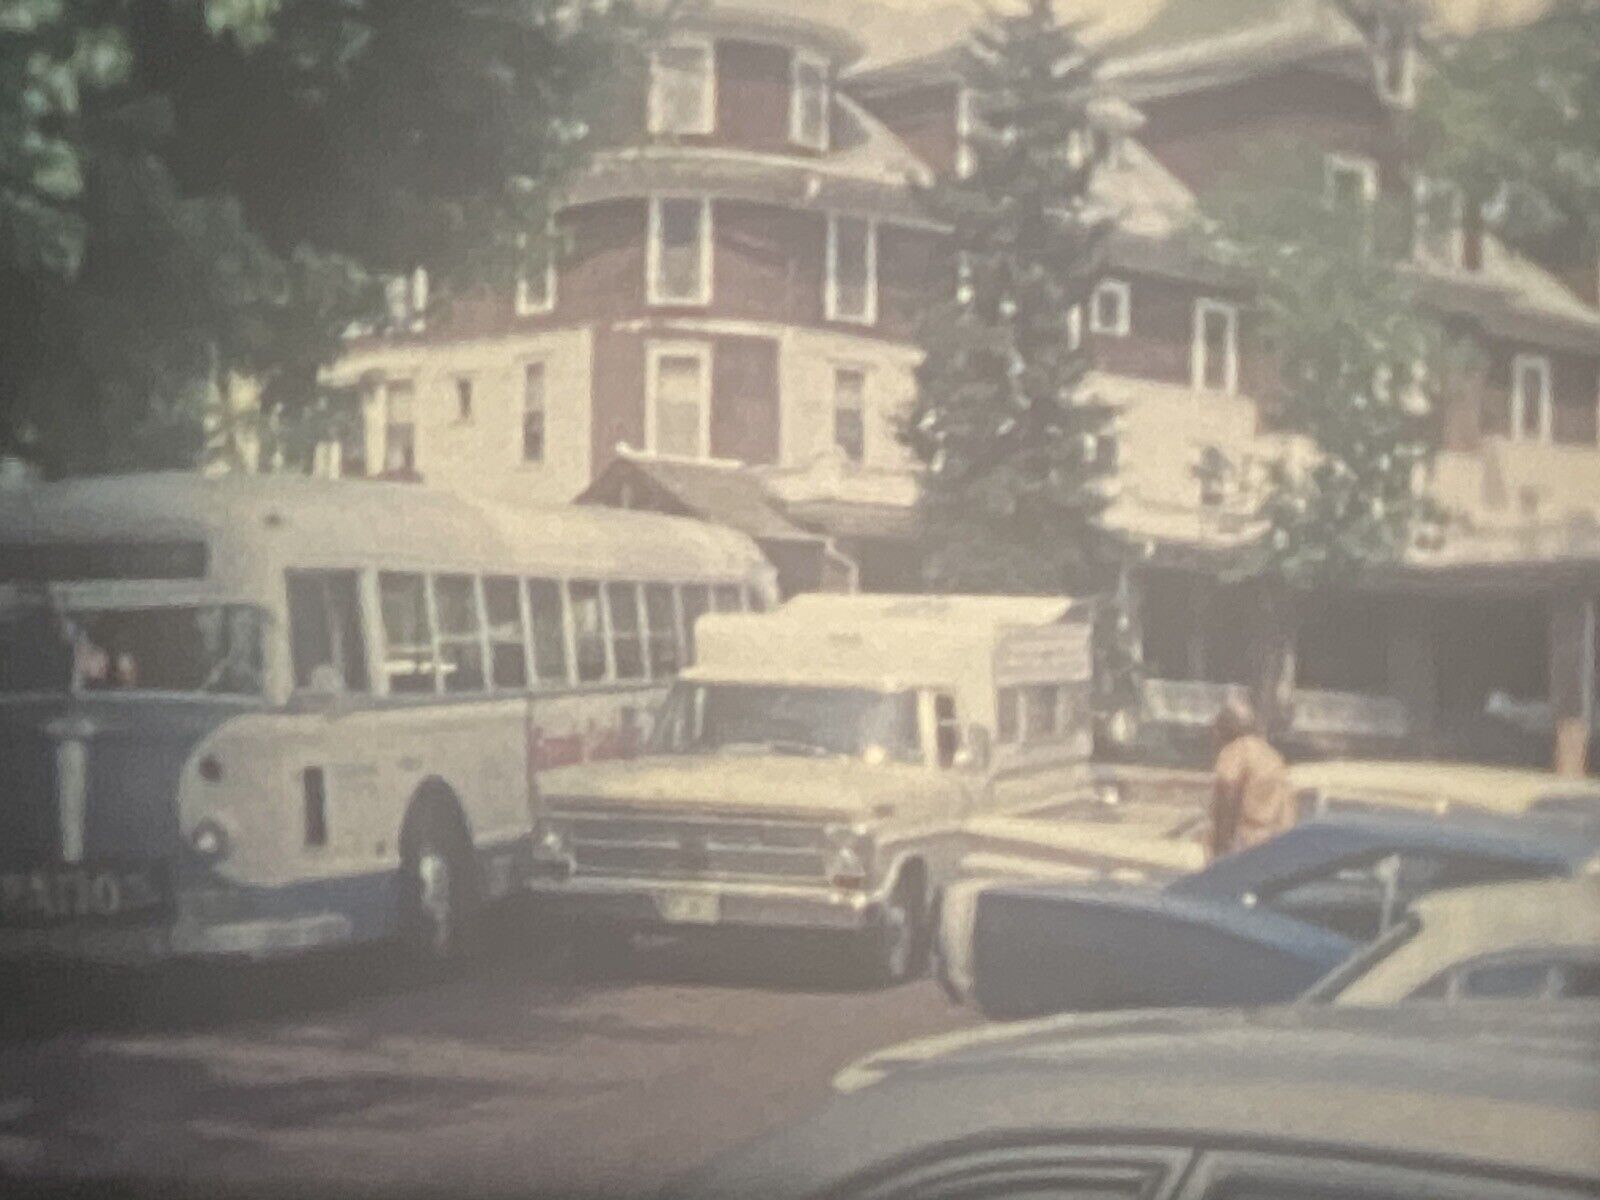 Vintage Colorado Springs Bus Street Scenes Home Movie Super 8mm 50ft Film